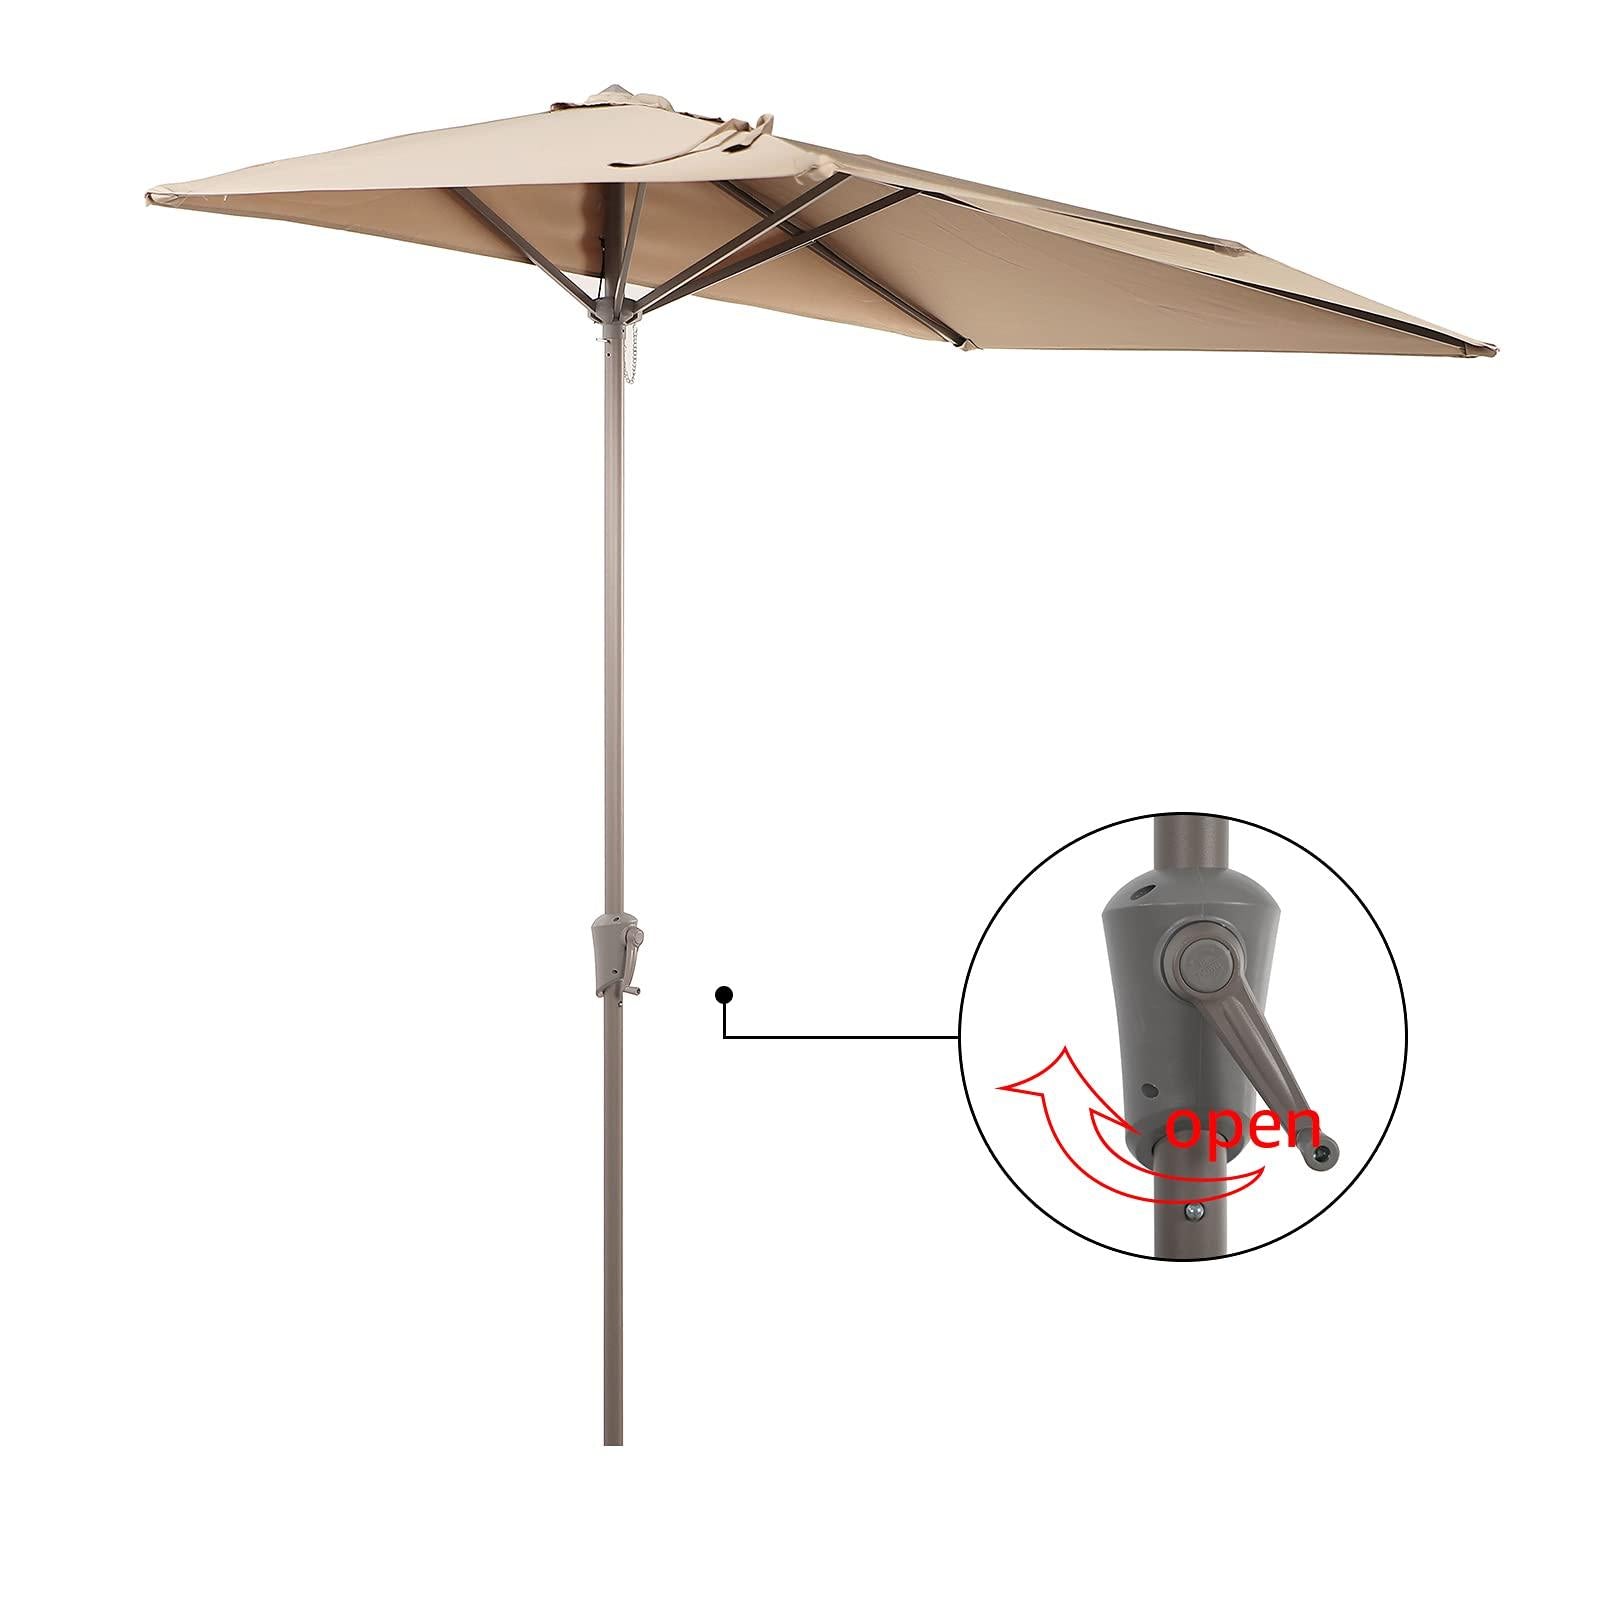 7.5' by 4' Half Rectangular Patio Outdoor Polyester Umbrella with Cran